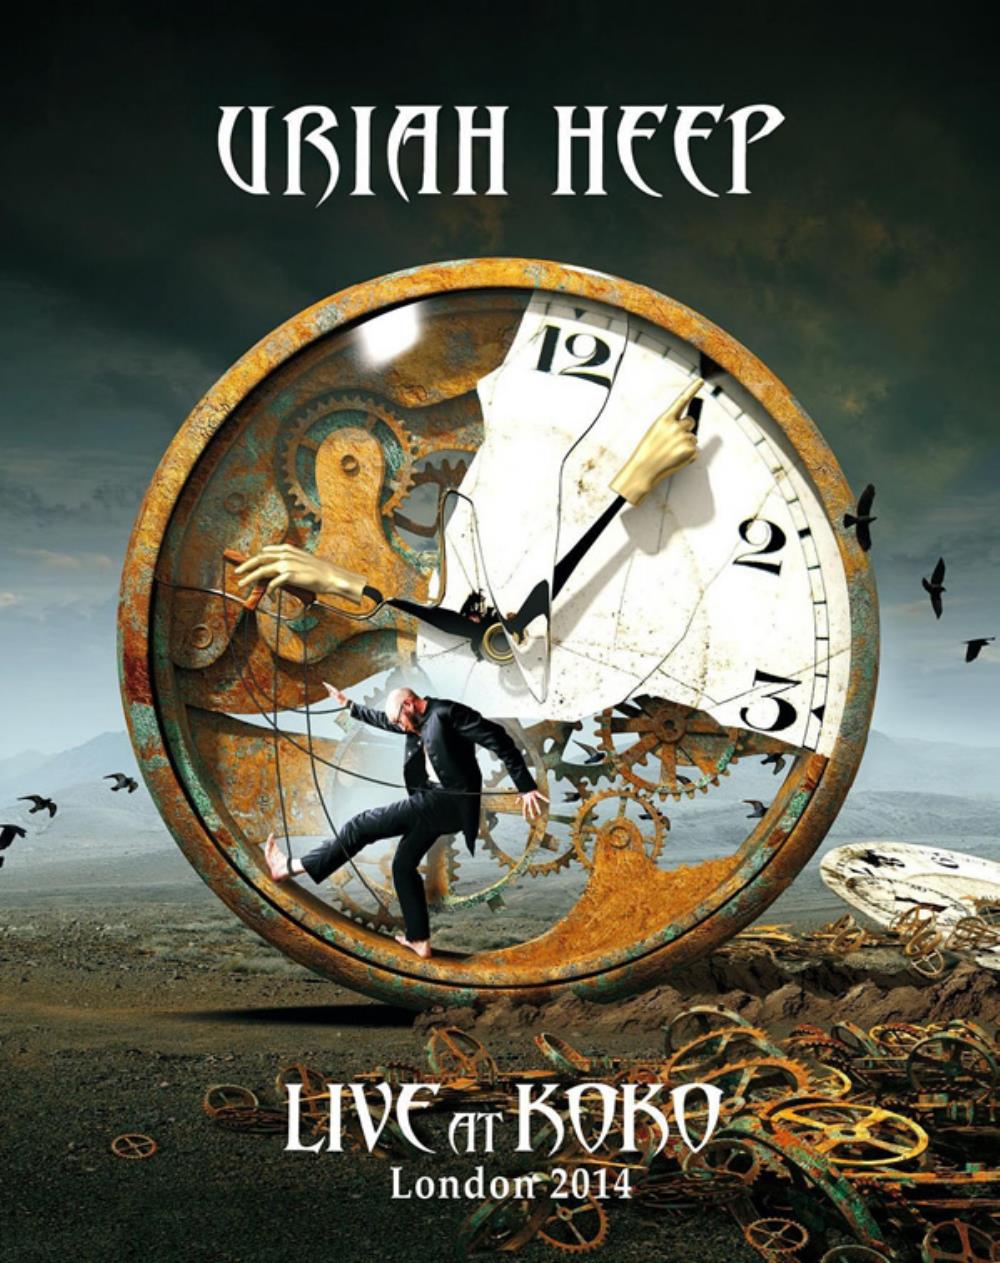 Uriah Heep Live At Koko - London 2014 album cover